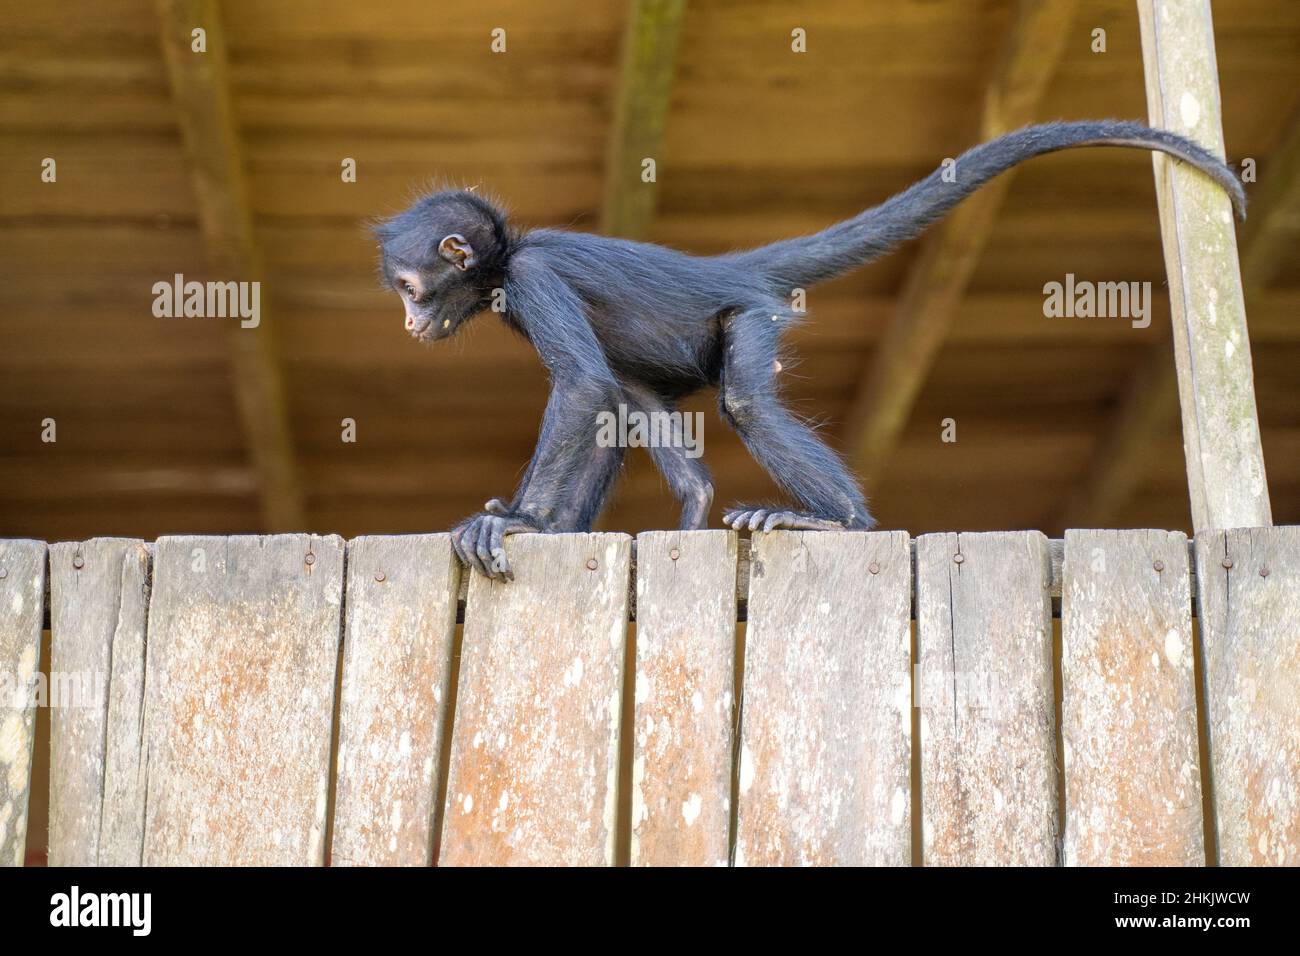 Baby spider monkey, at the Community November 3, The Village (La Aldea), Amazon, Peru. Stock Photo